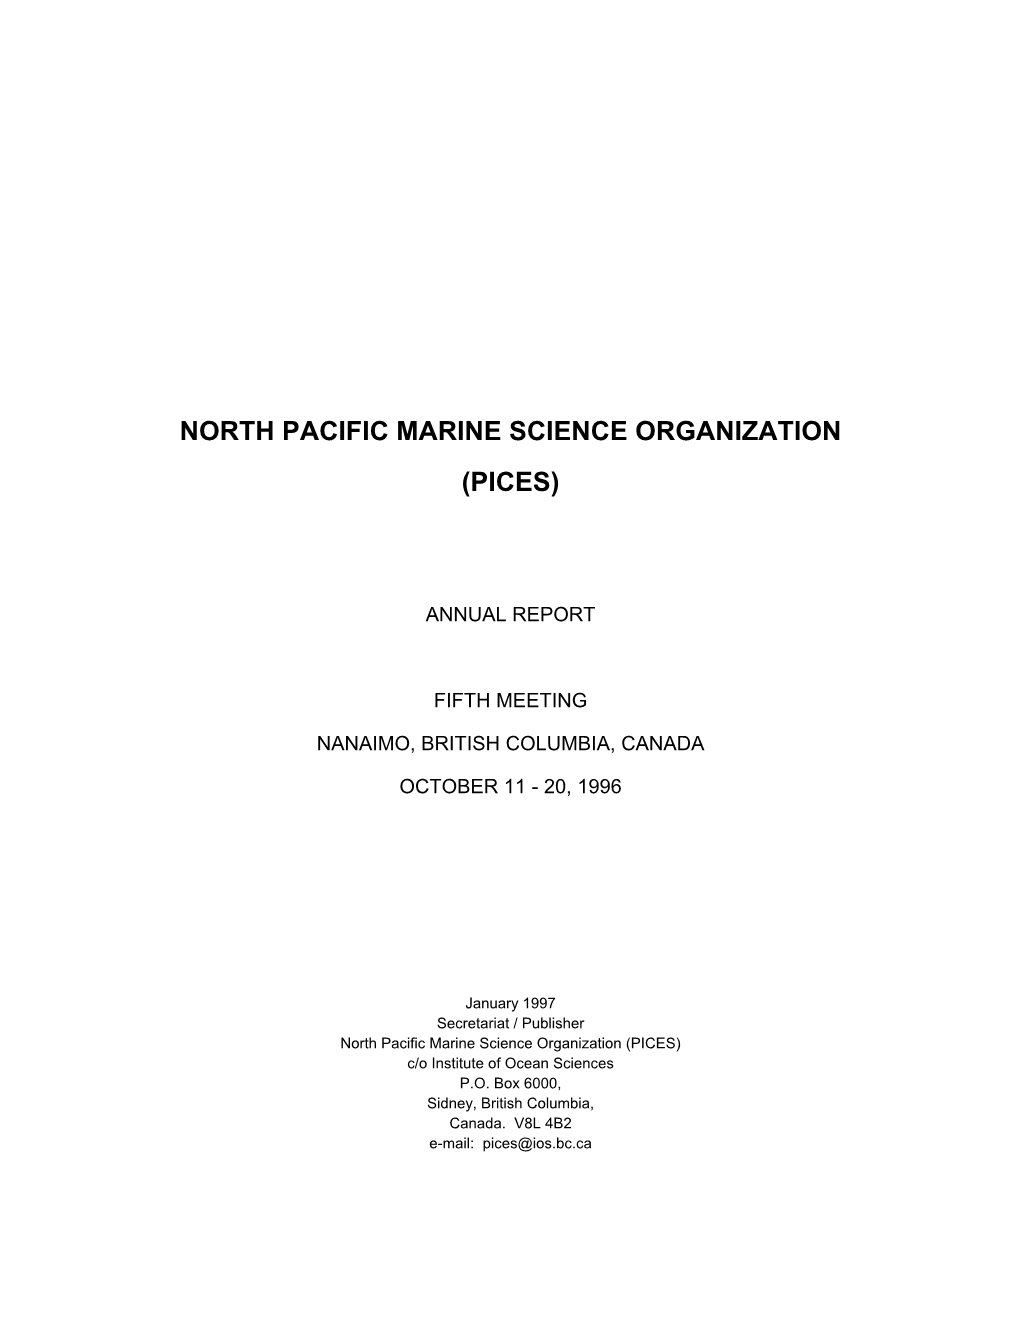 North Pacific Marine Science Organization (Pices)